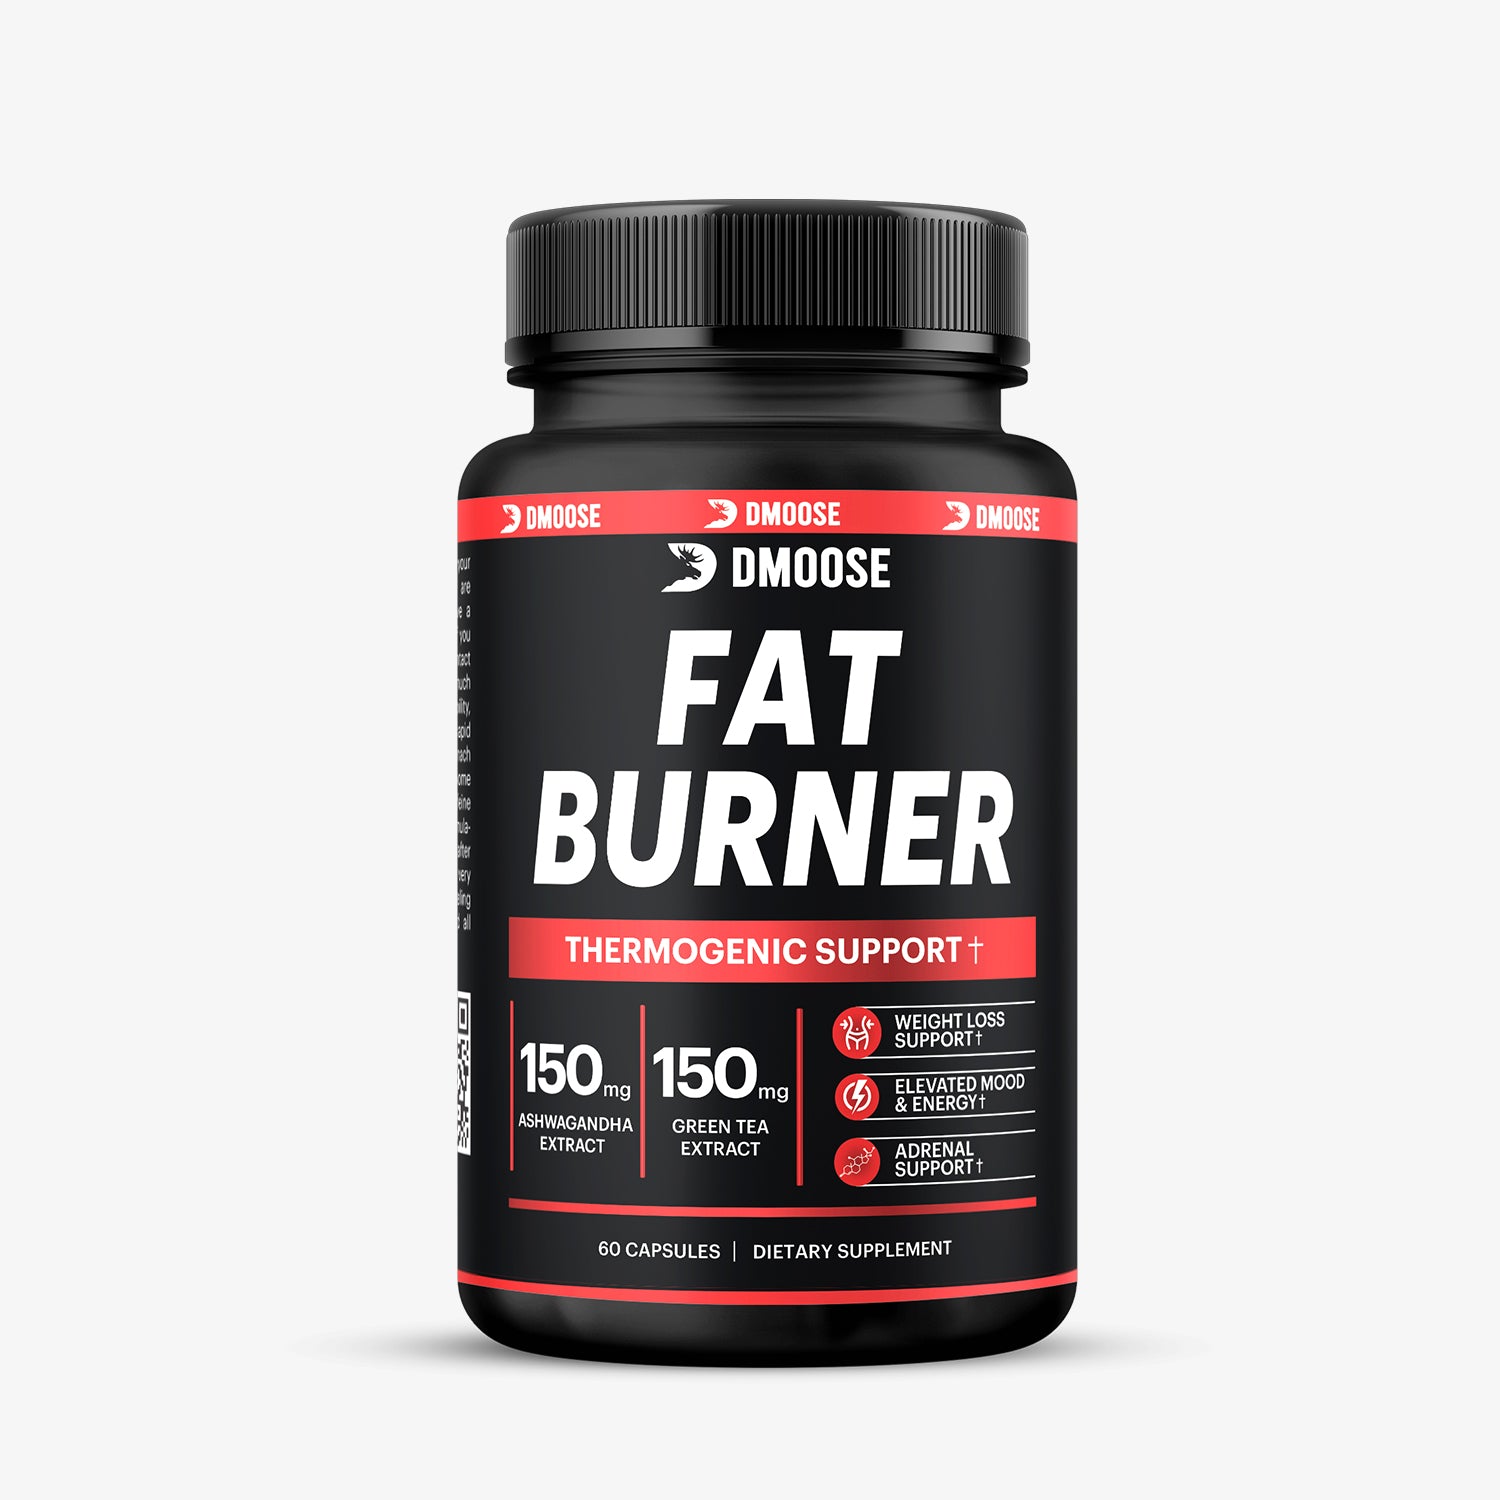 Fat burning supplements